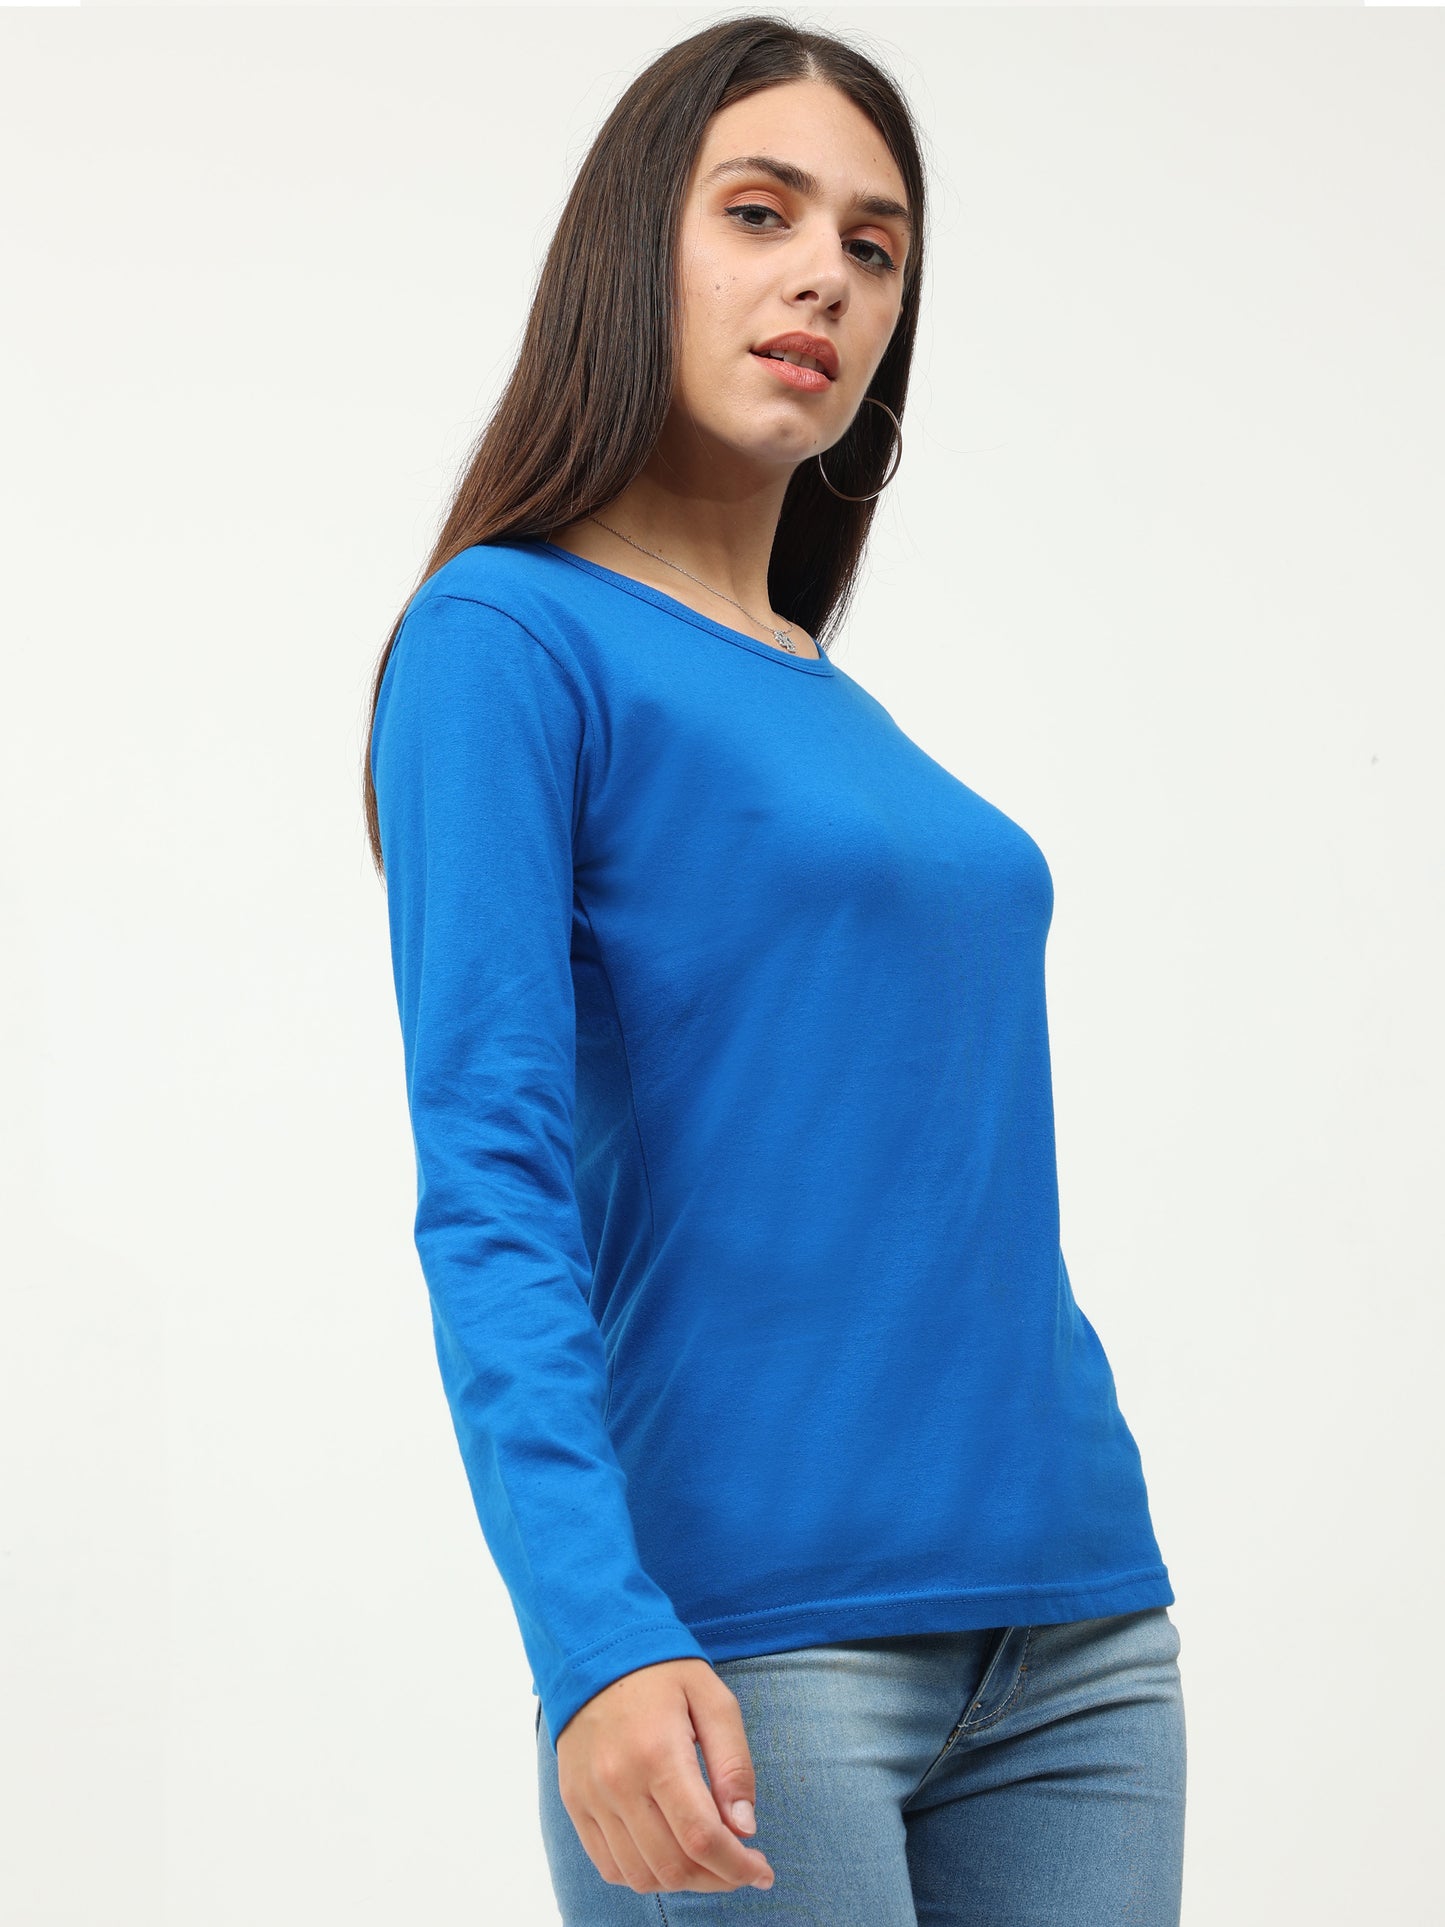 Women's Cotton Plain Round Neck Full Sleeve Royal Blue Color T-Shirt